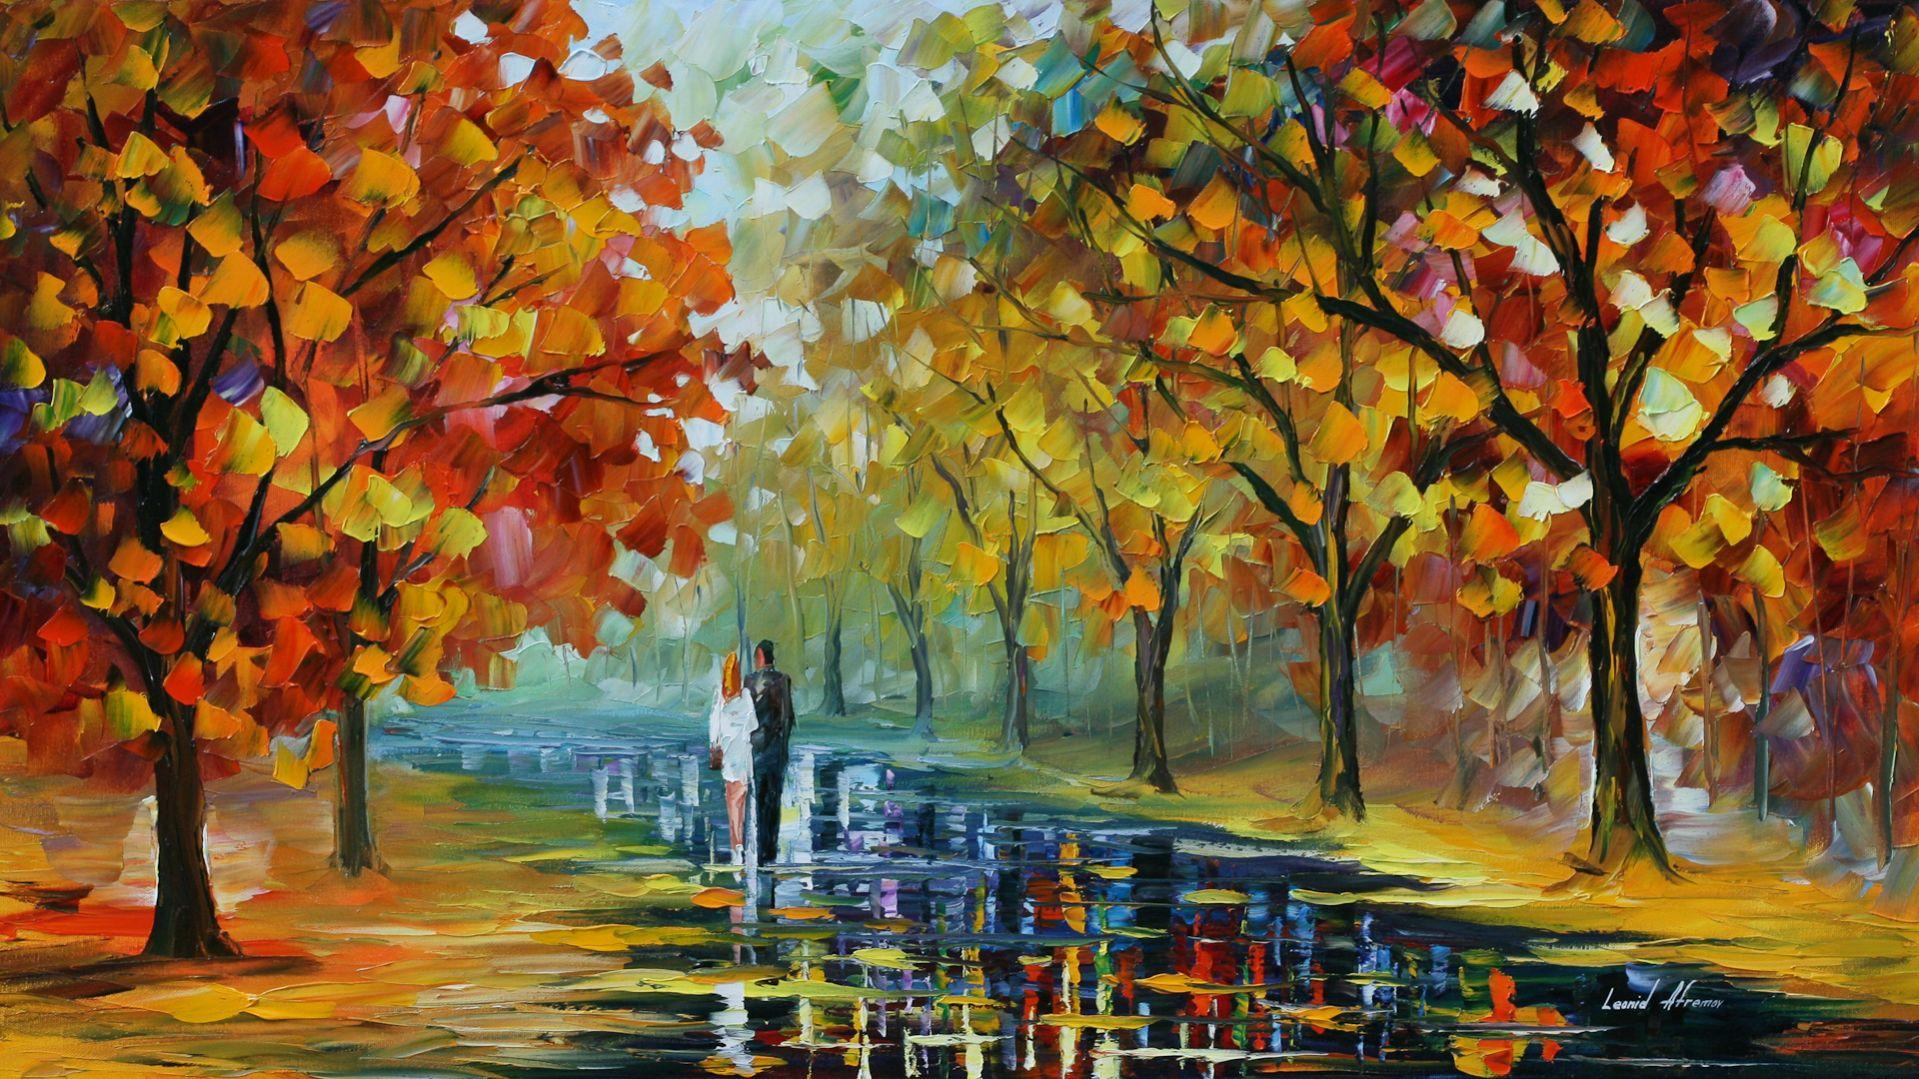 Romantic Moment by Afremov.nice fall wallpaper 1920x1080